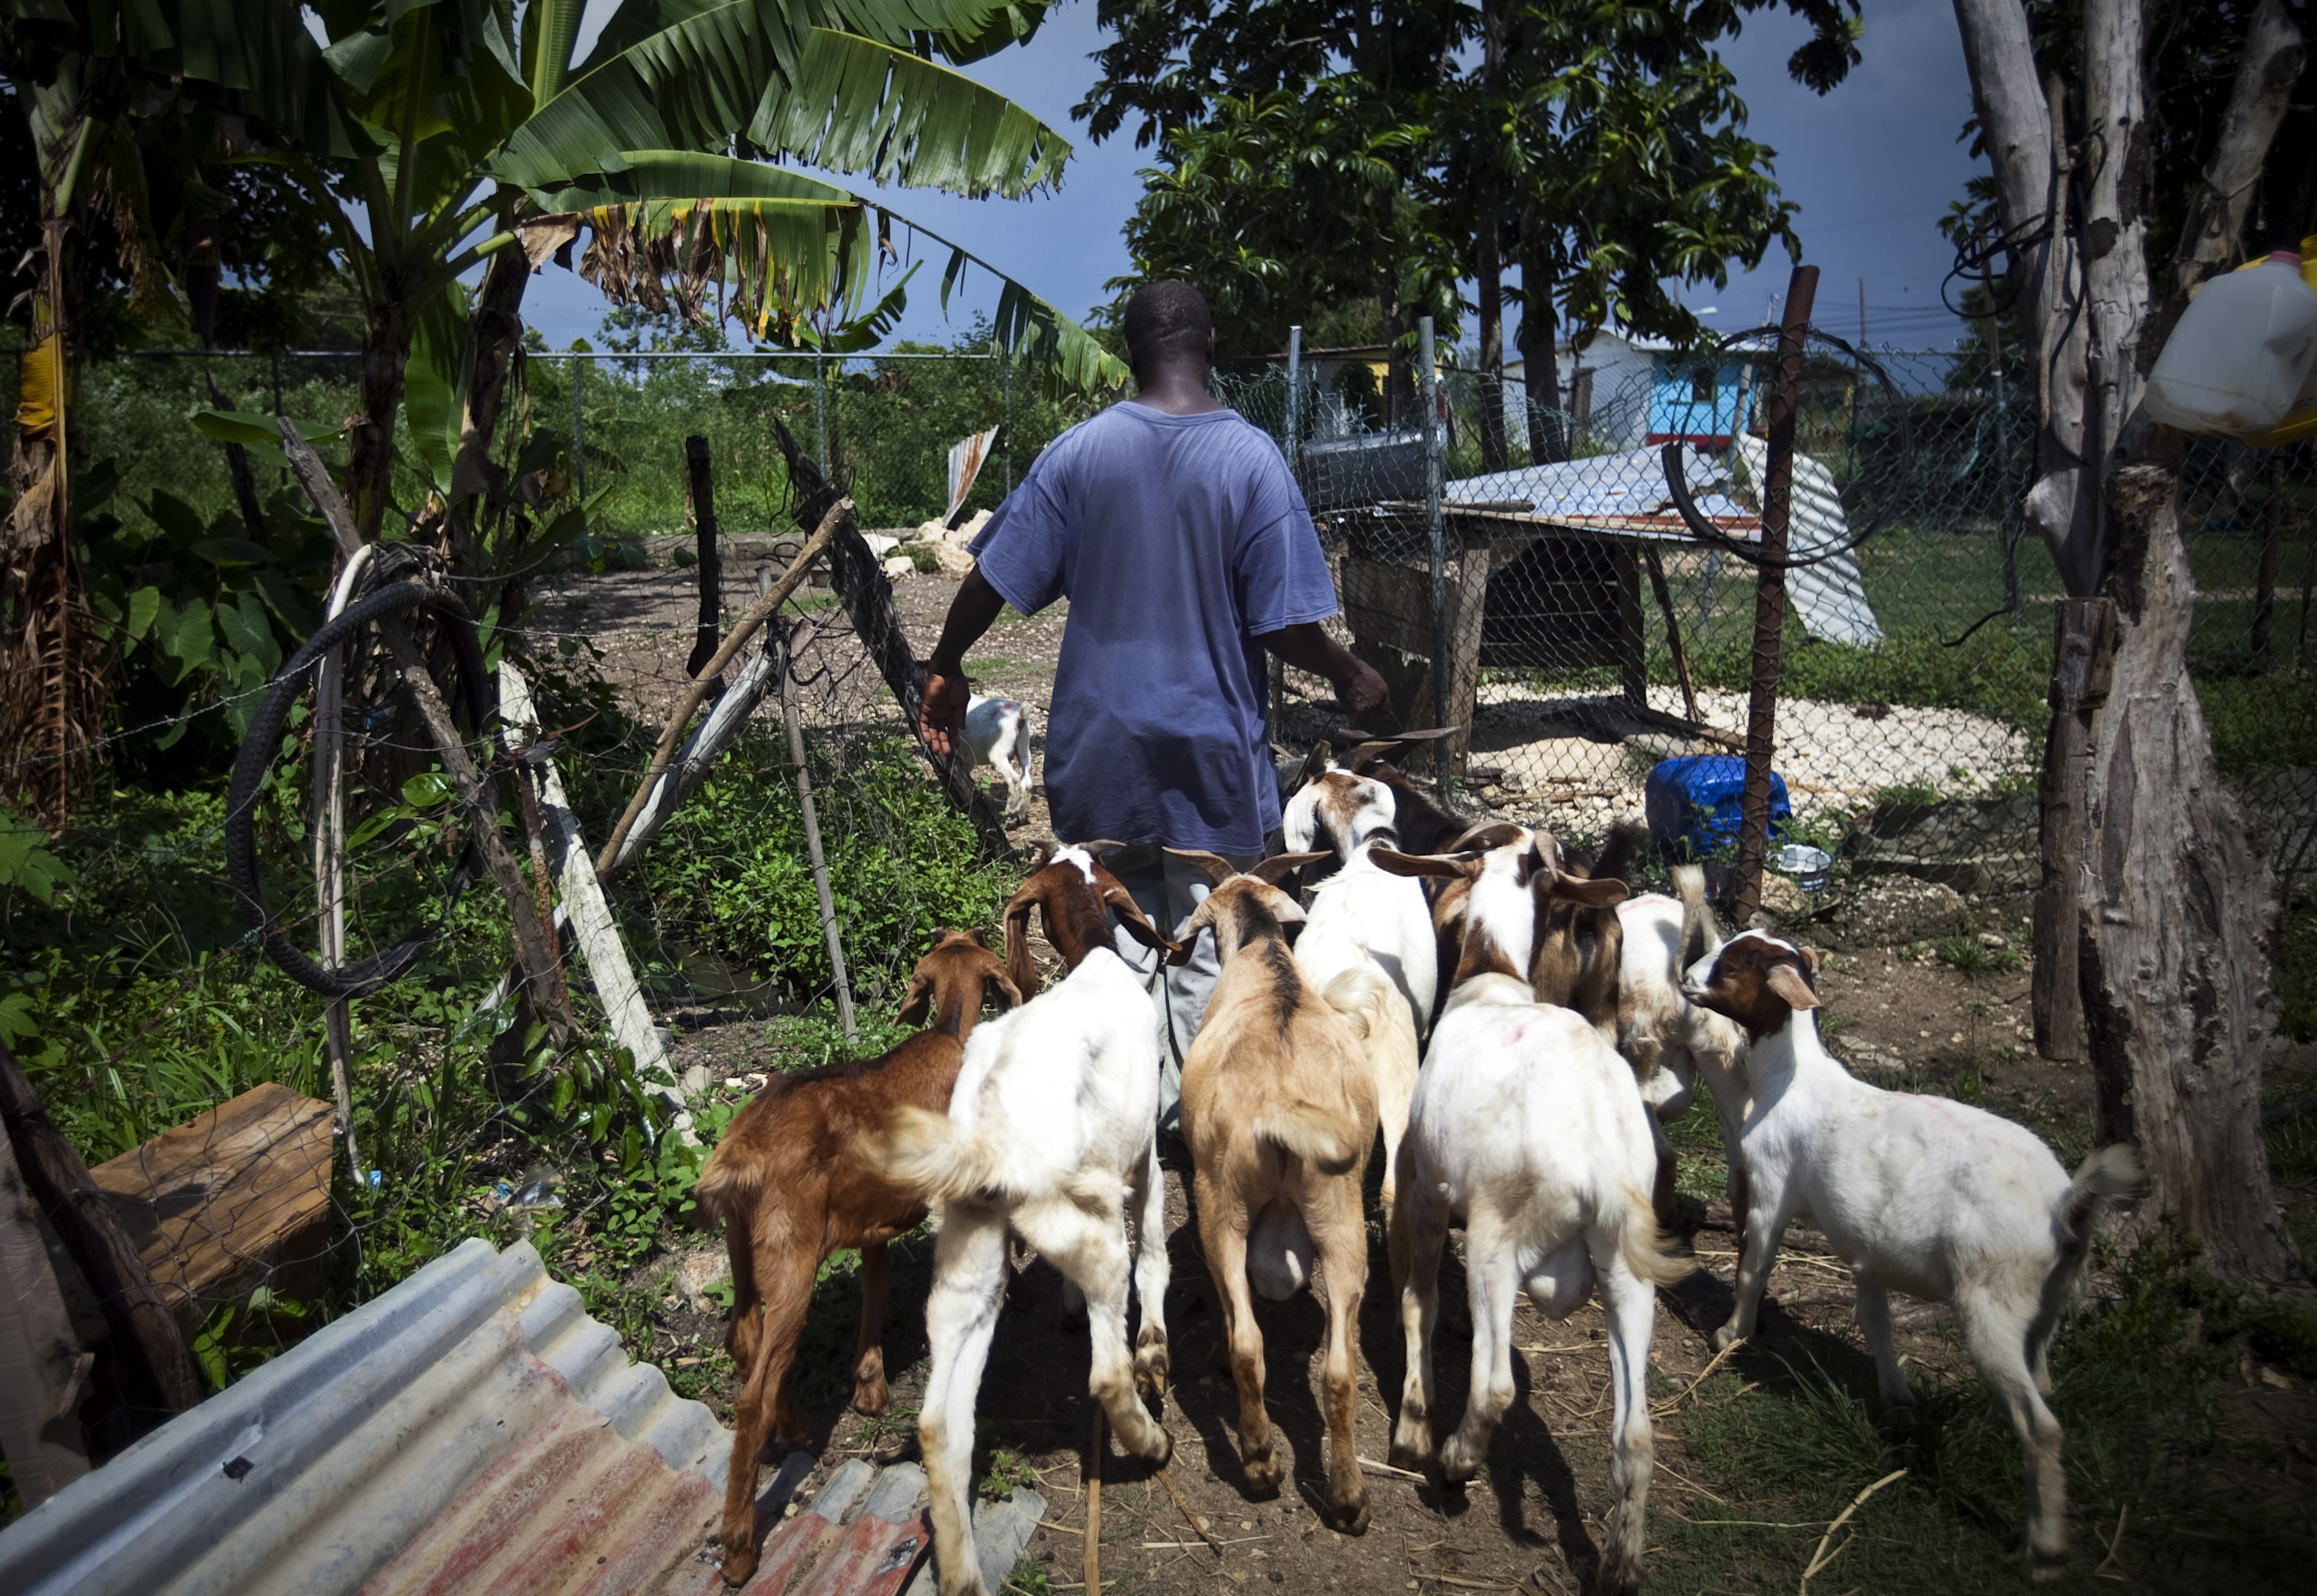 Jamaica: Building a Goat Farming Industry | Pulitzer Center